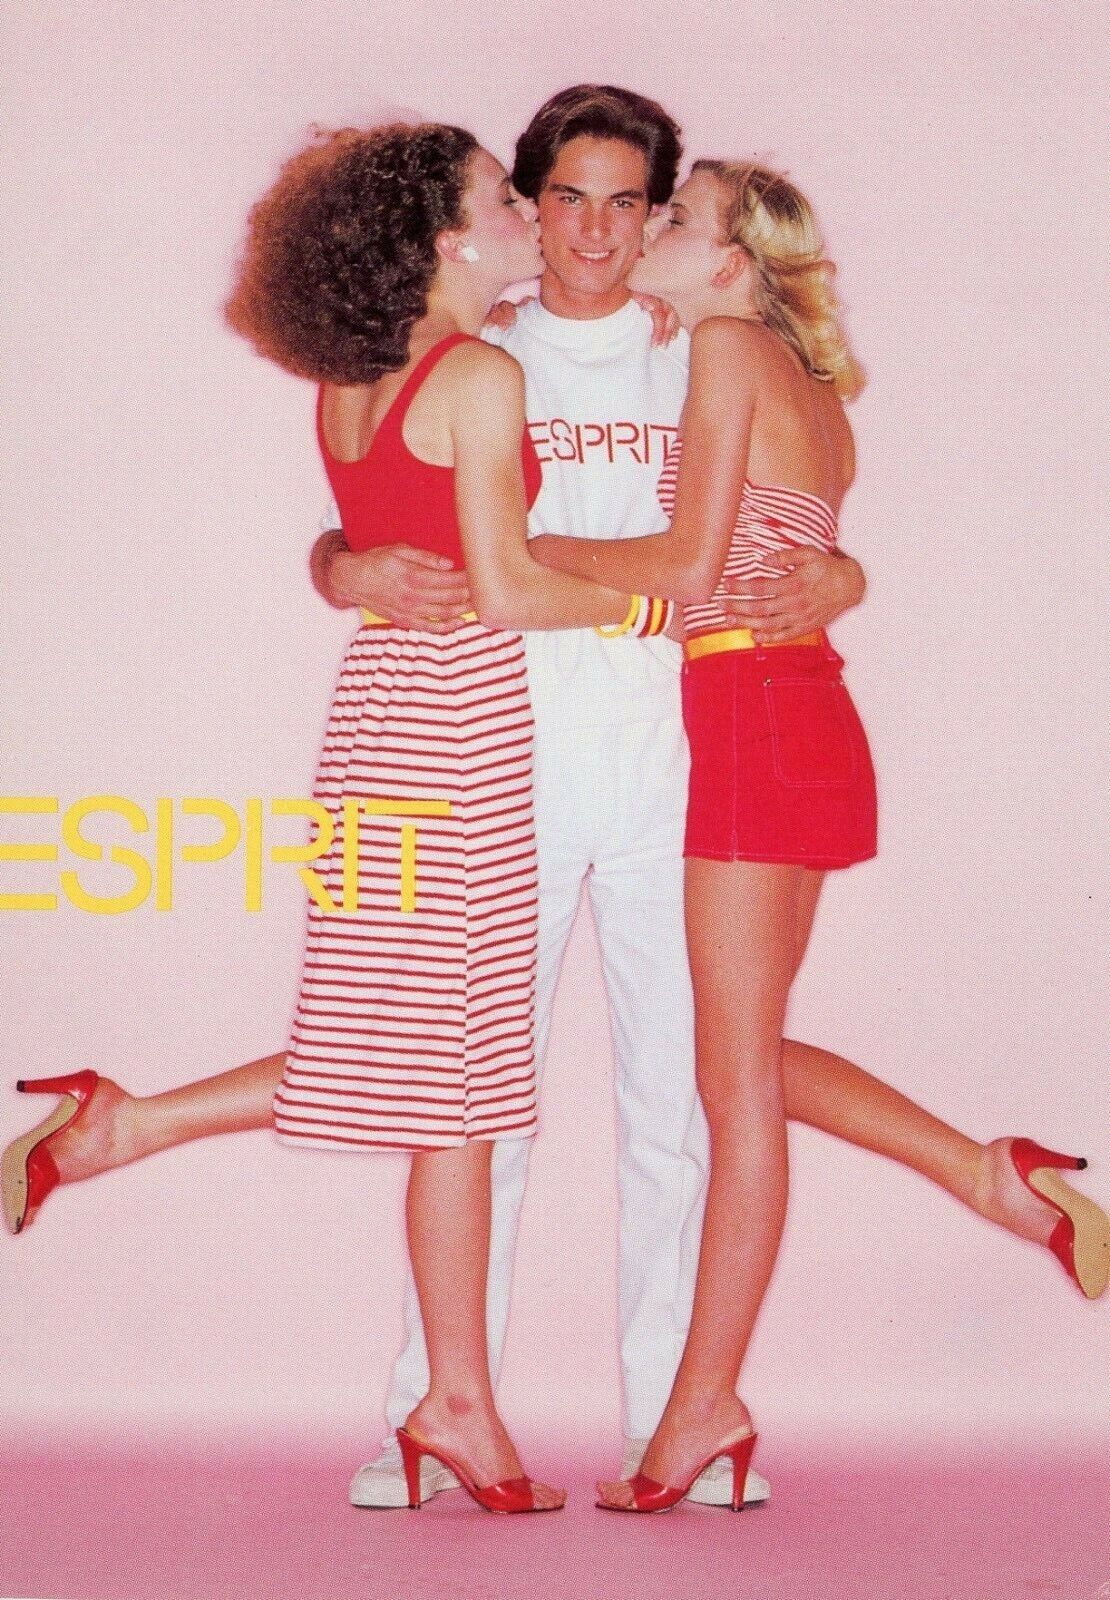 Esprit Retrospective Series Number six 1980/1997 2 girls high heels Postcard 